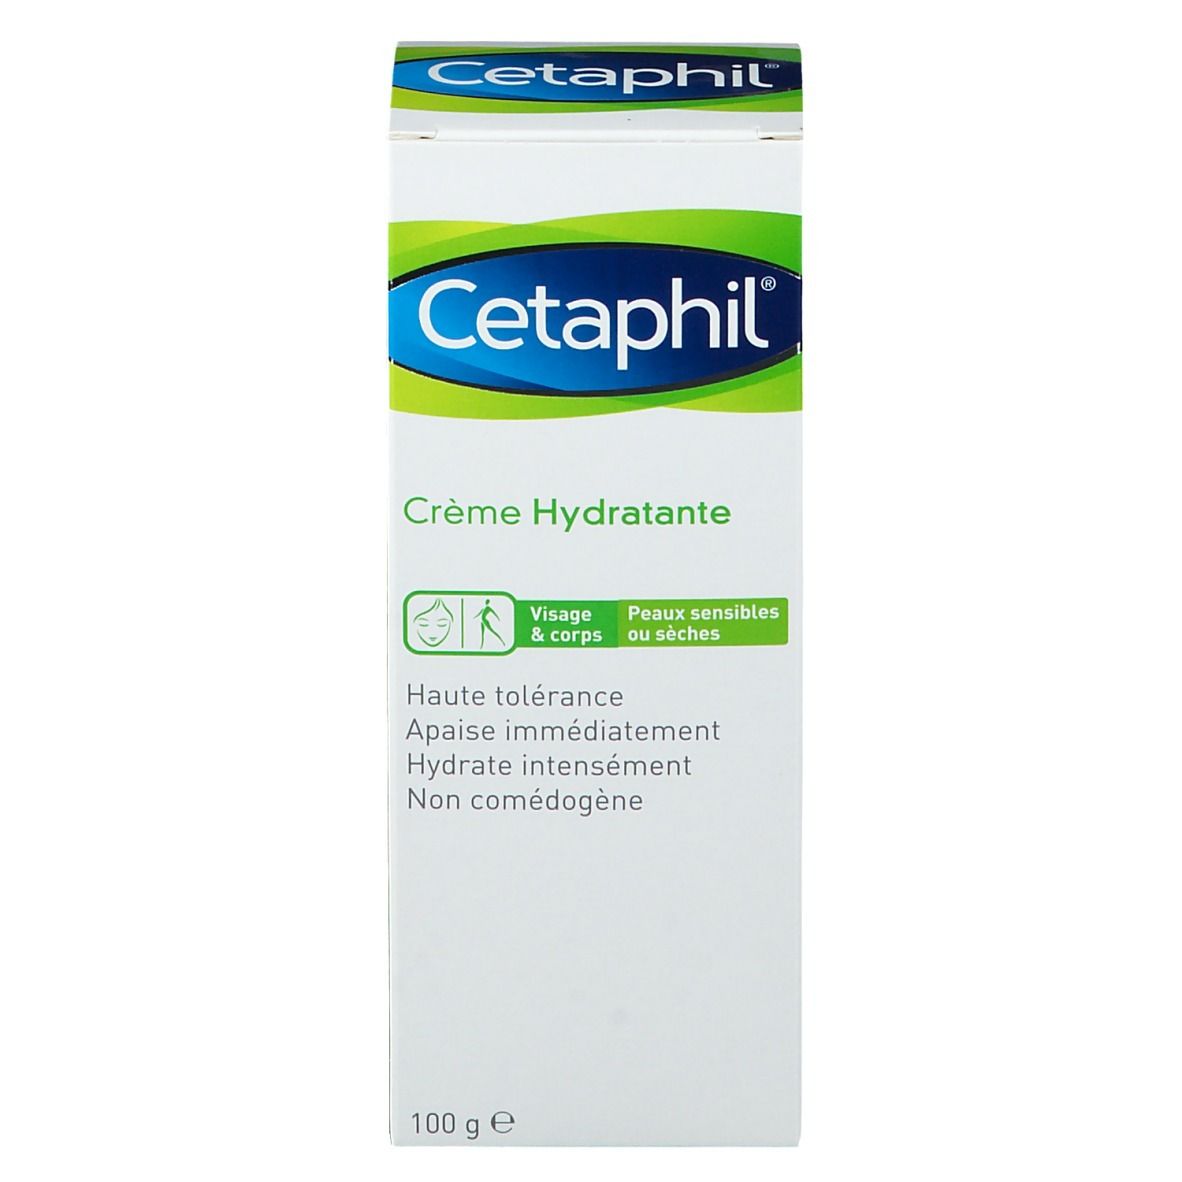 Cetaphil® Crème Hydratante